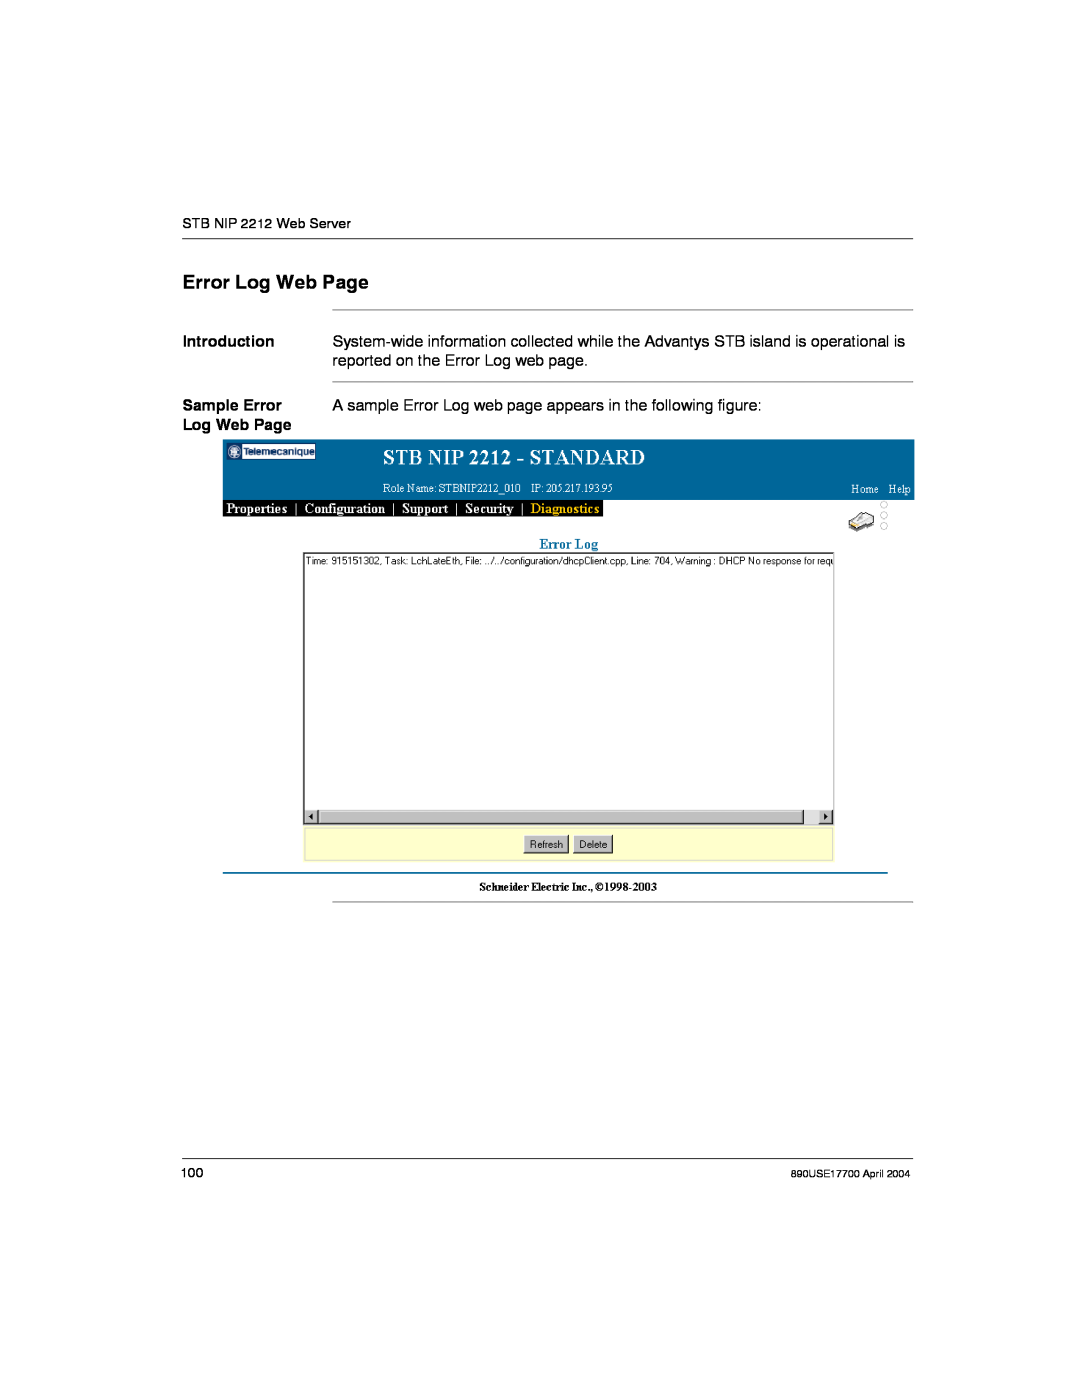 Schneider Electric manual Error Log Web Page, 890USE17700 April 